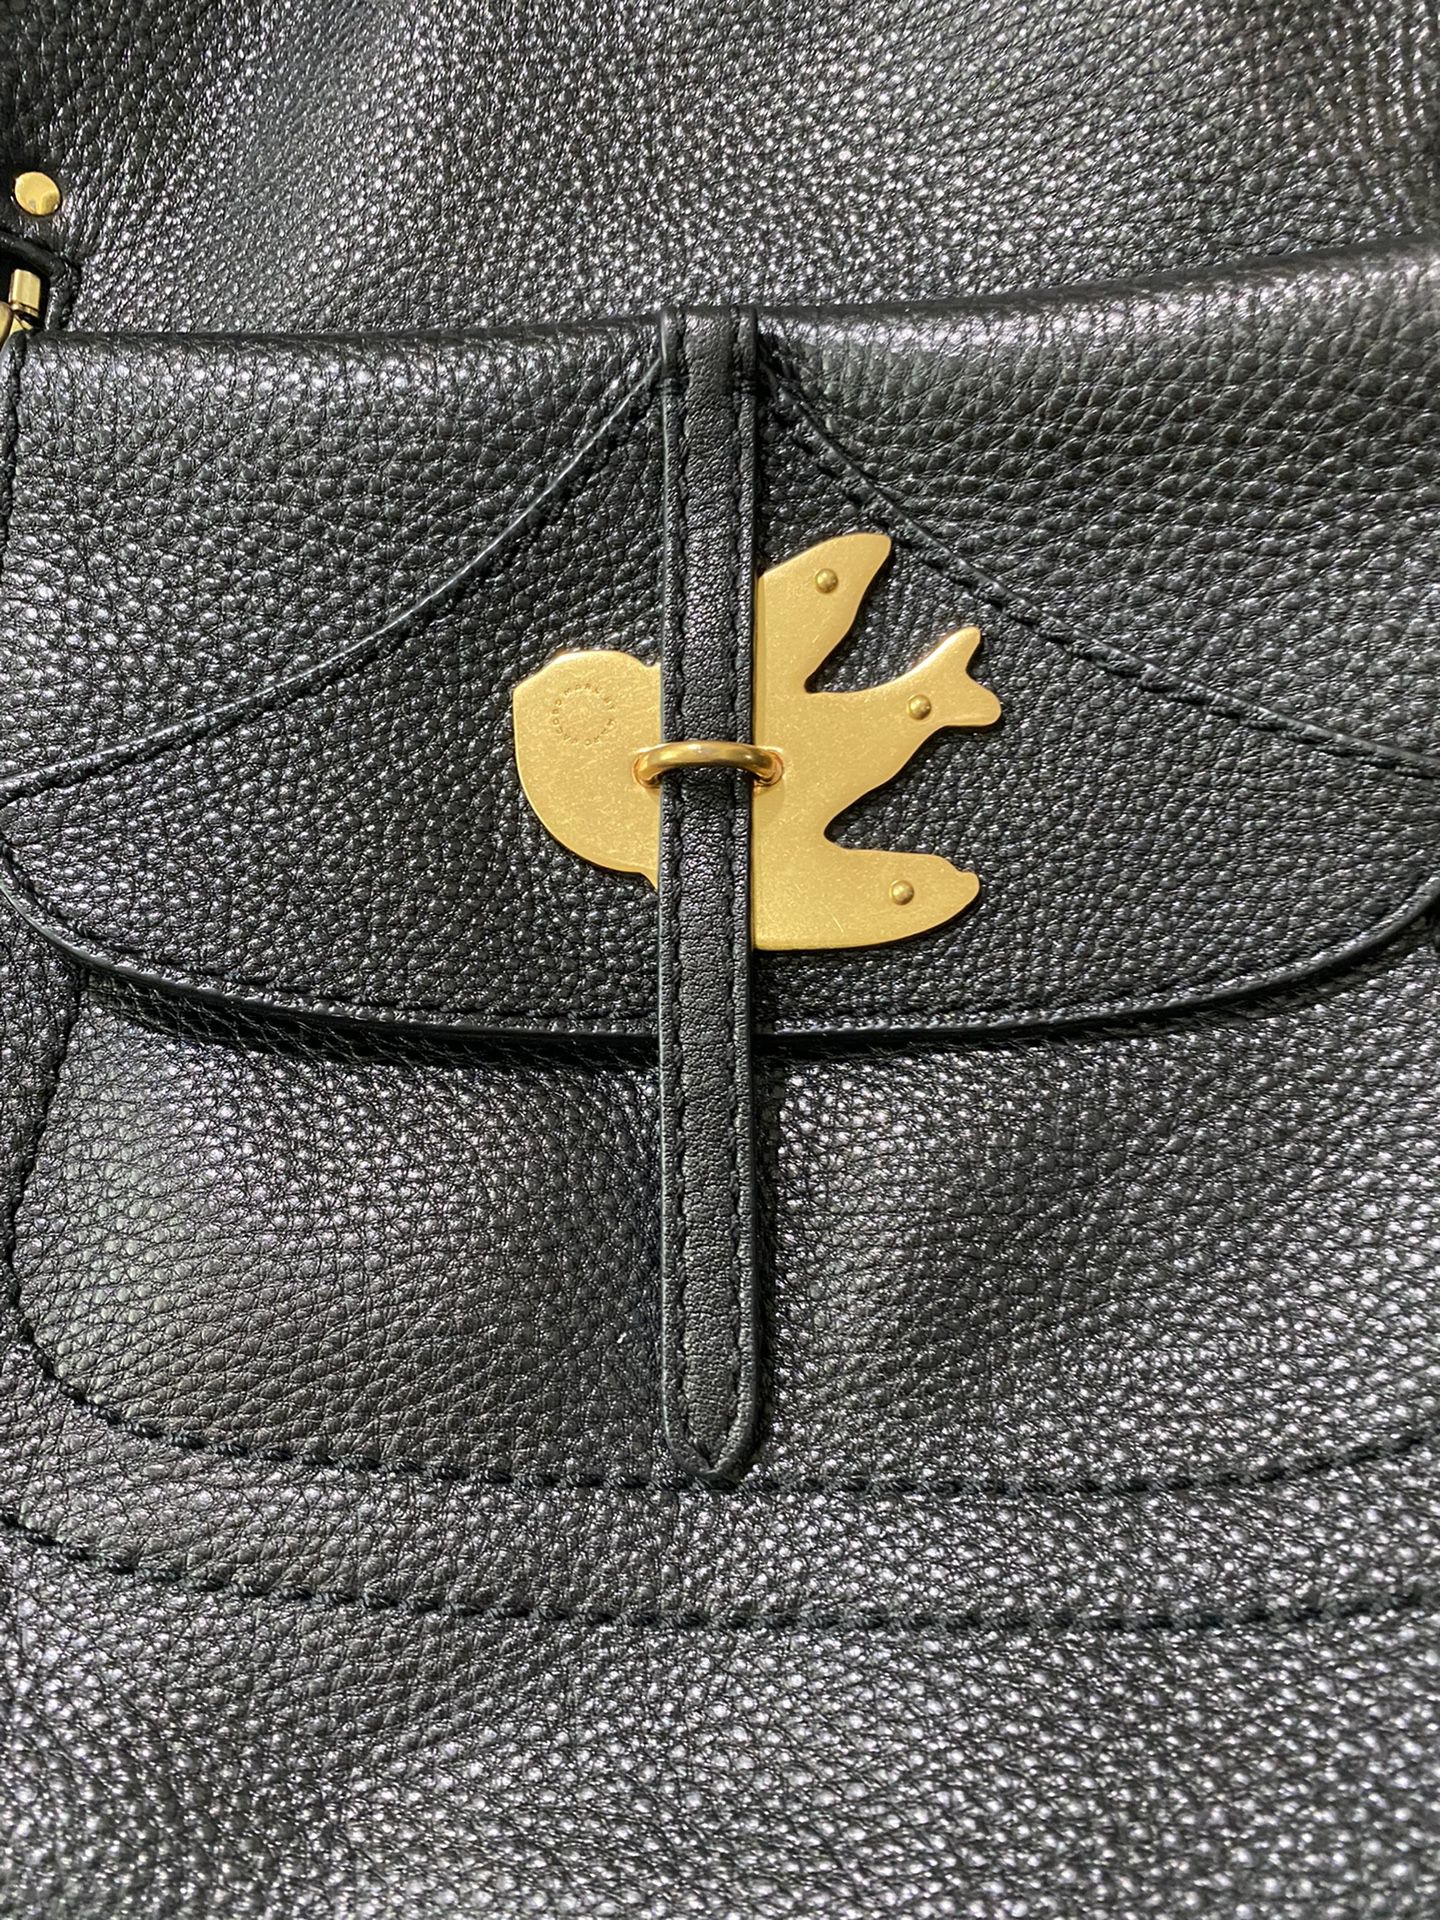 Marc Jacobs Handbag In Excellent Condition ! Rare!